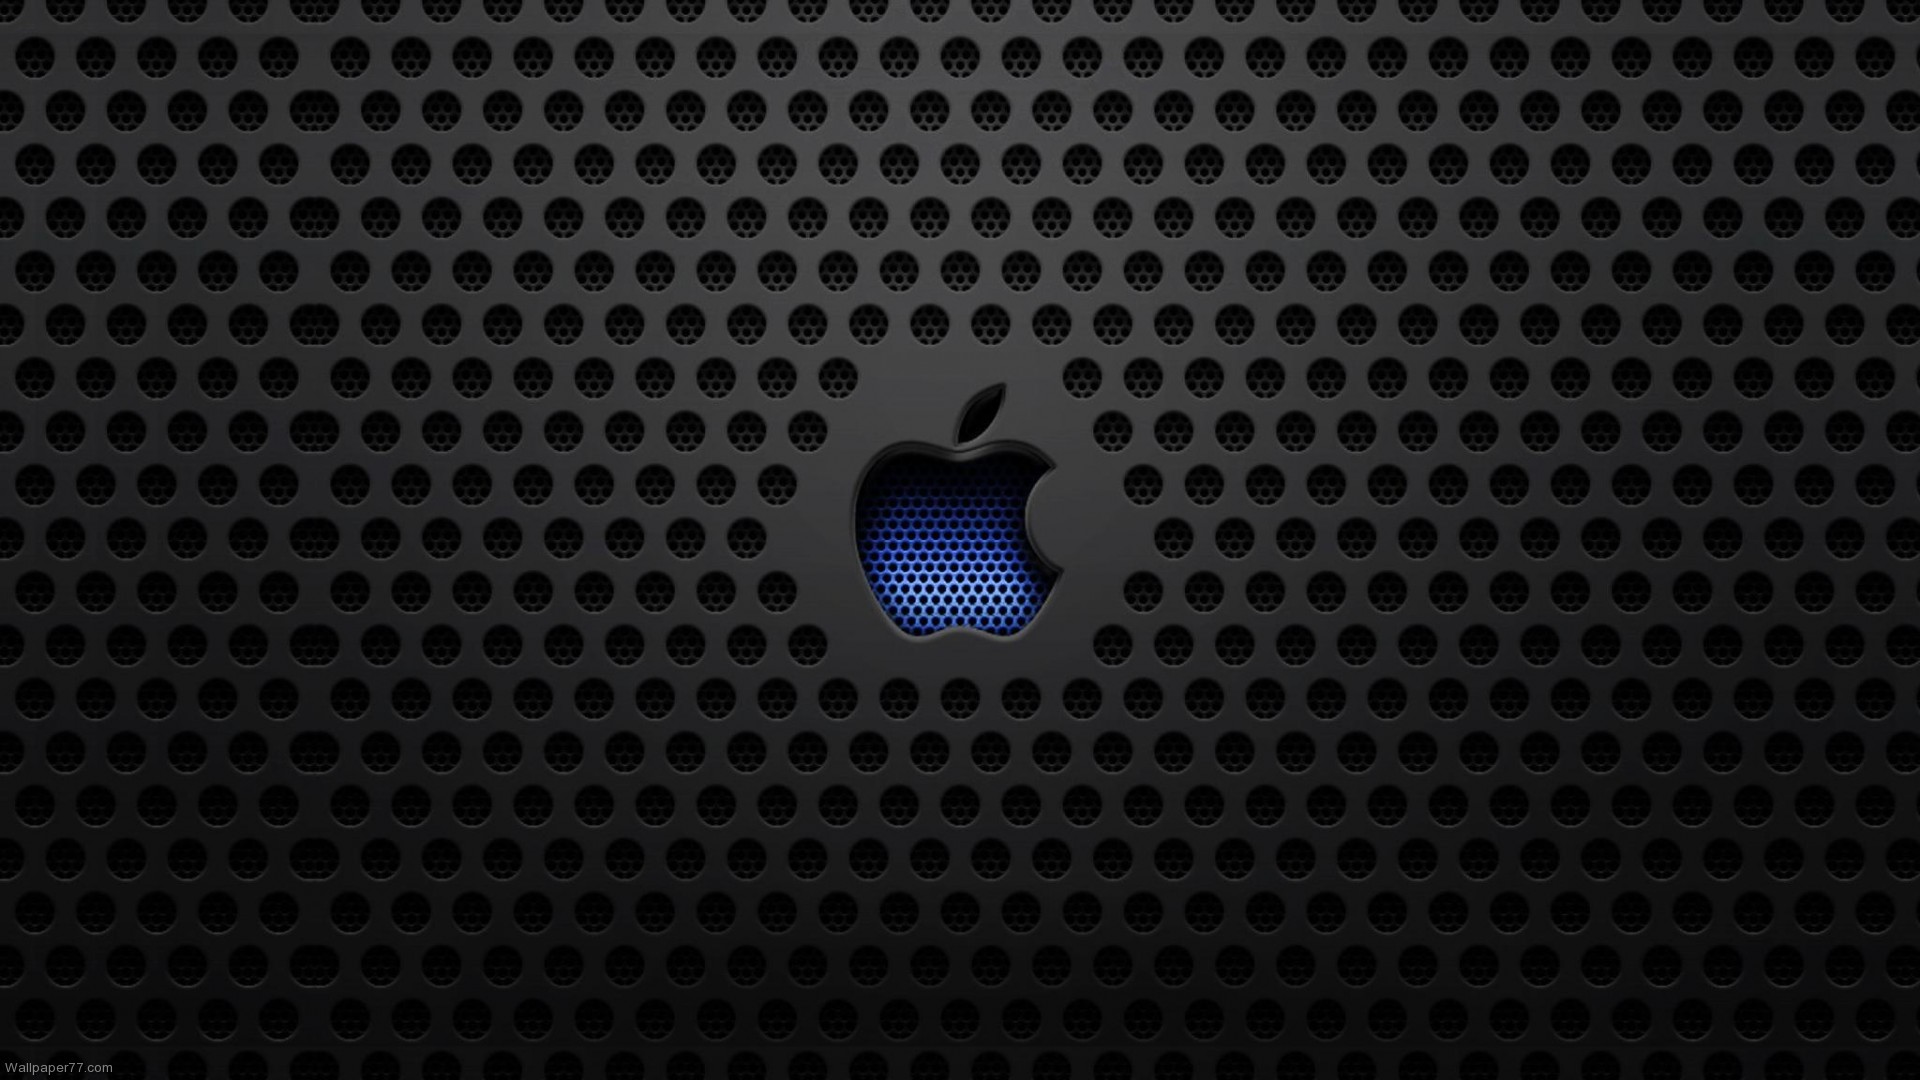 Apple Logo iPad Wallpaper Retina Display